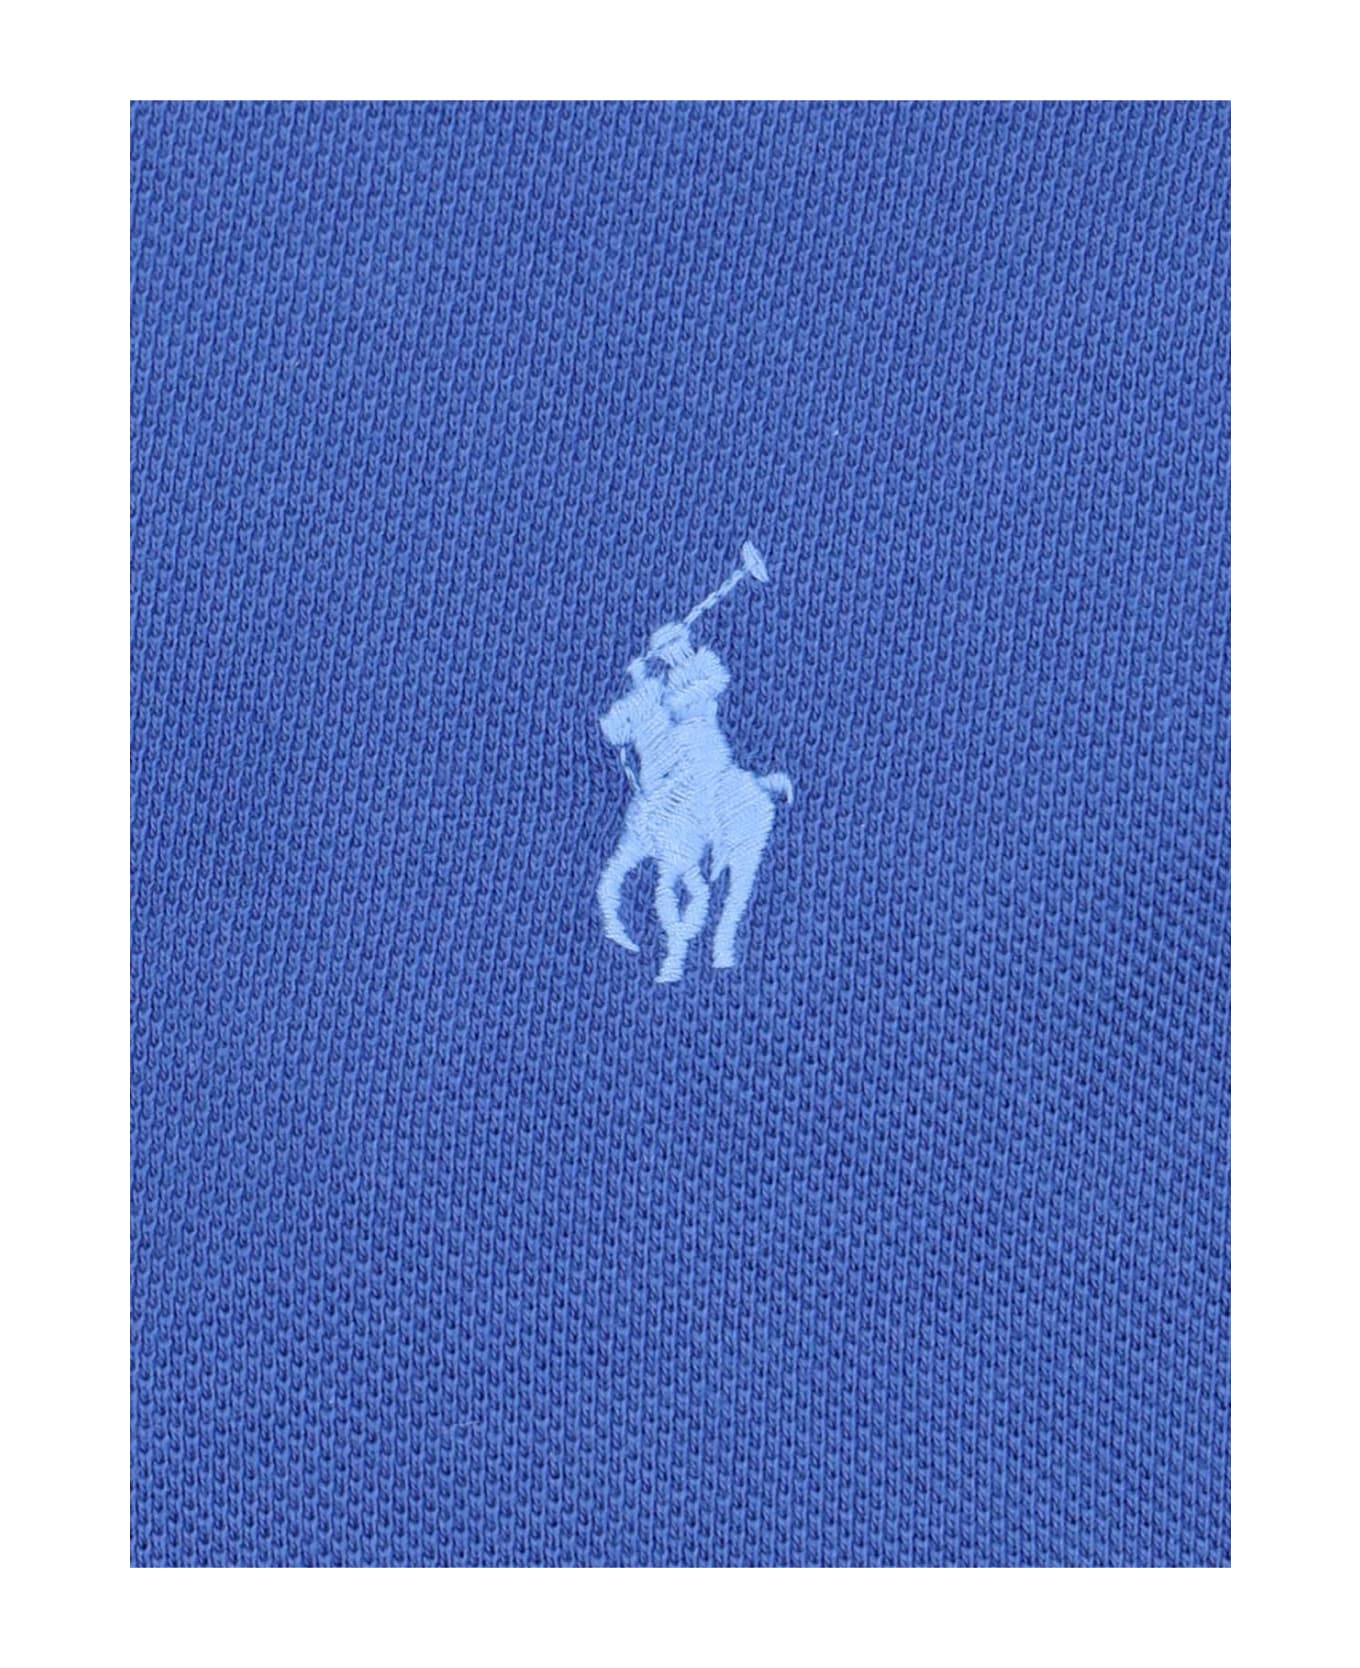 Polo Ralph Lauren Logo Polo Shirt Polo Ralph Lauren - BLUE ポロシャツ